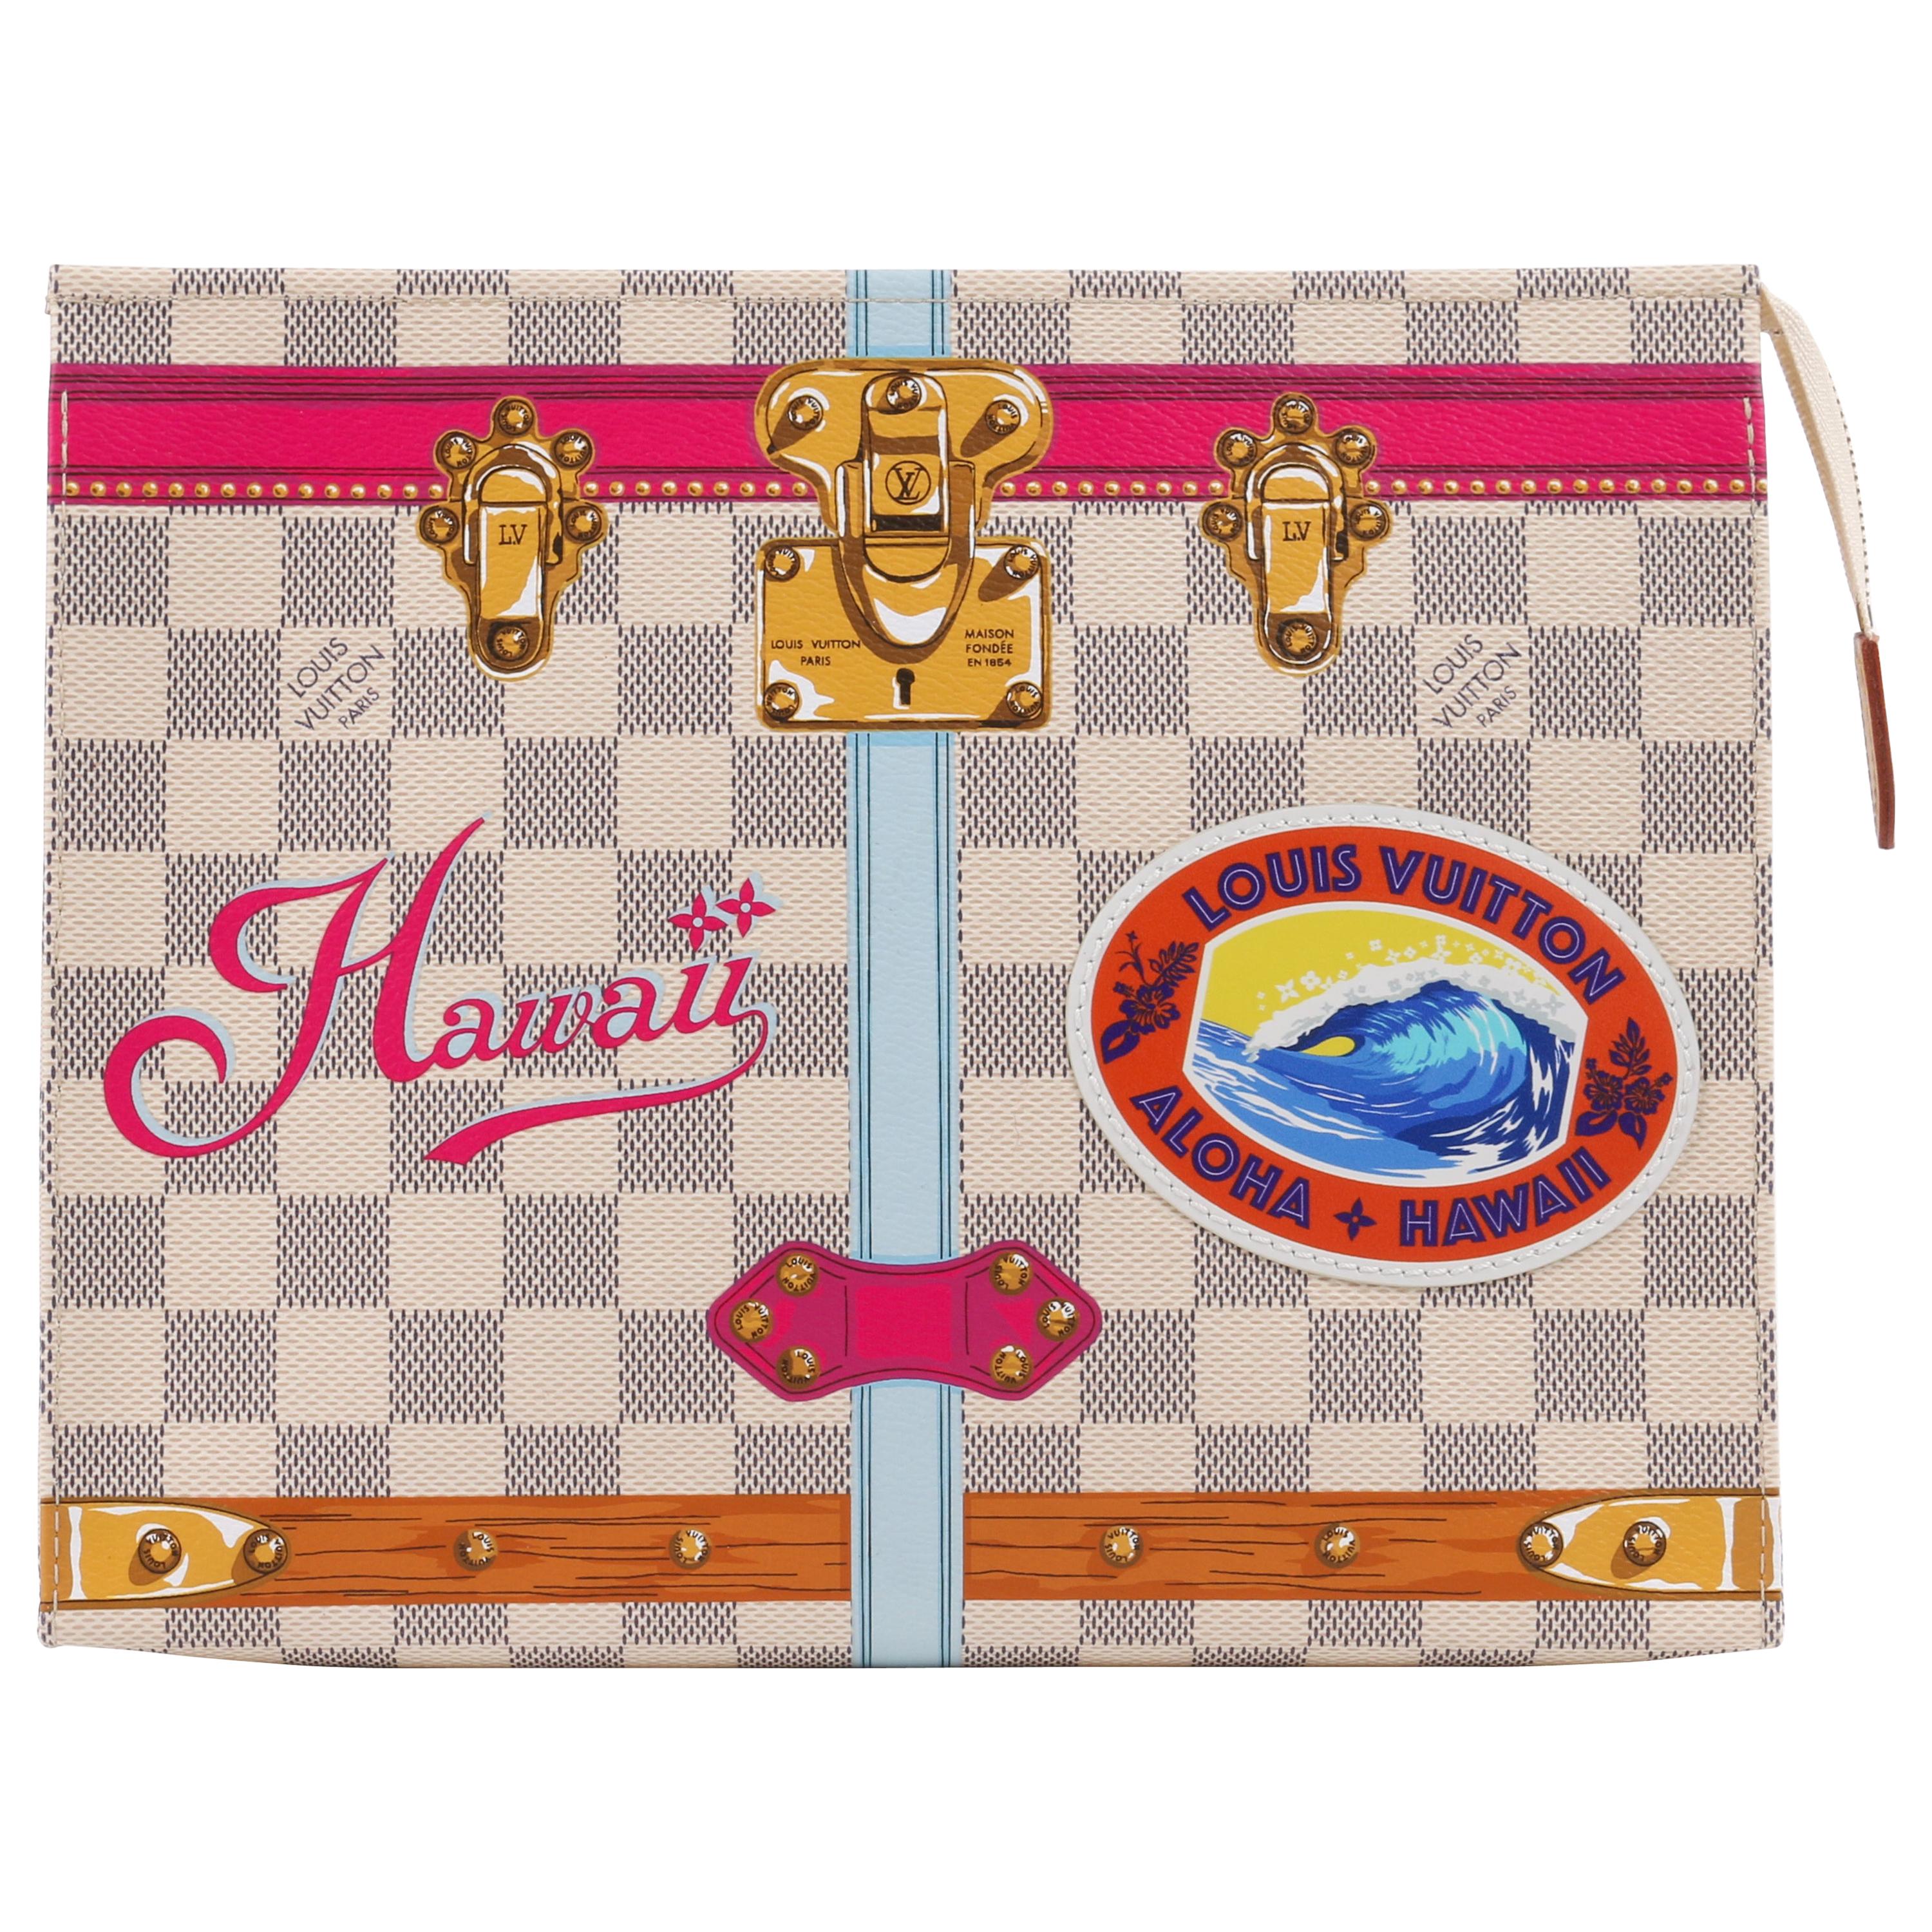 Louis Vuitton Hawaii - For Sale on 1stDibs